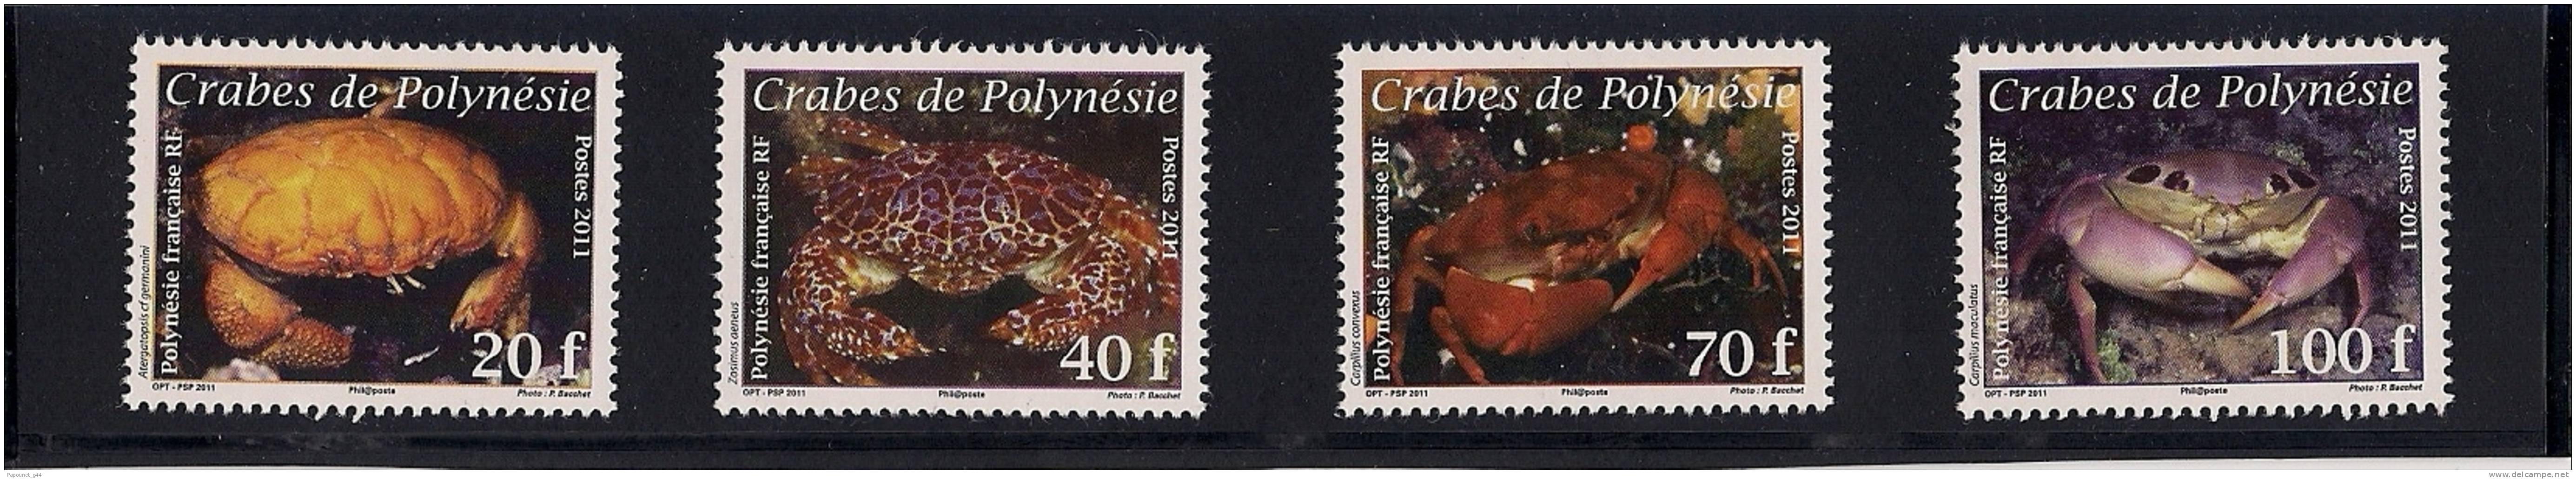 Polynésie ( Crabes De Polynésie 2011 ) - Unused Stamps